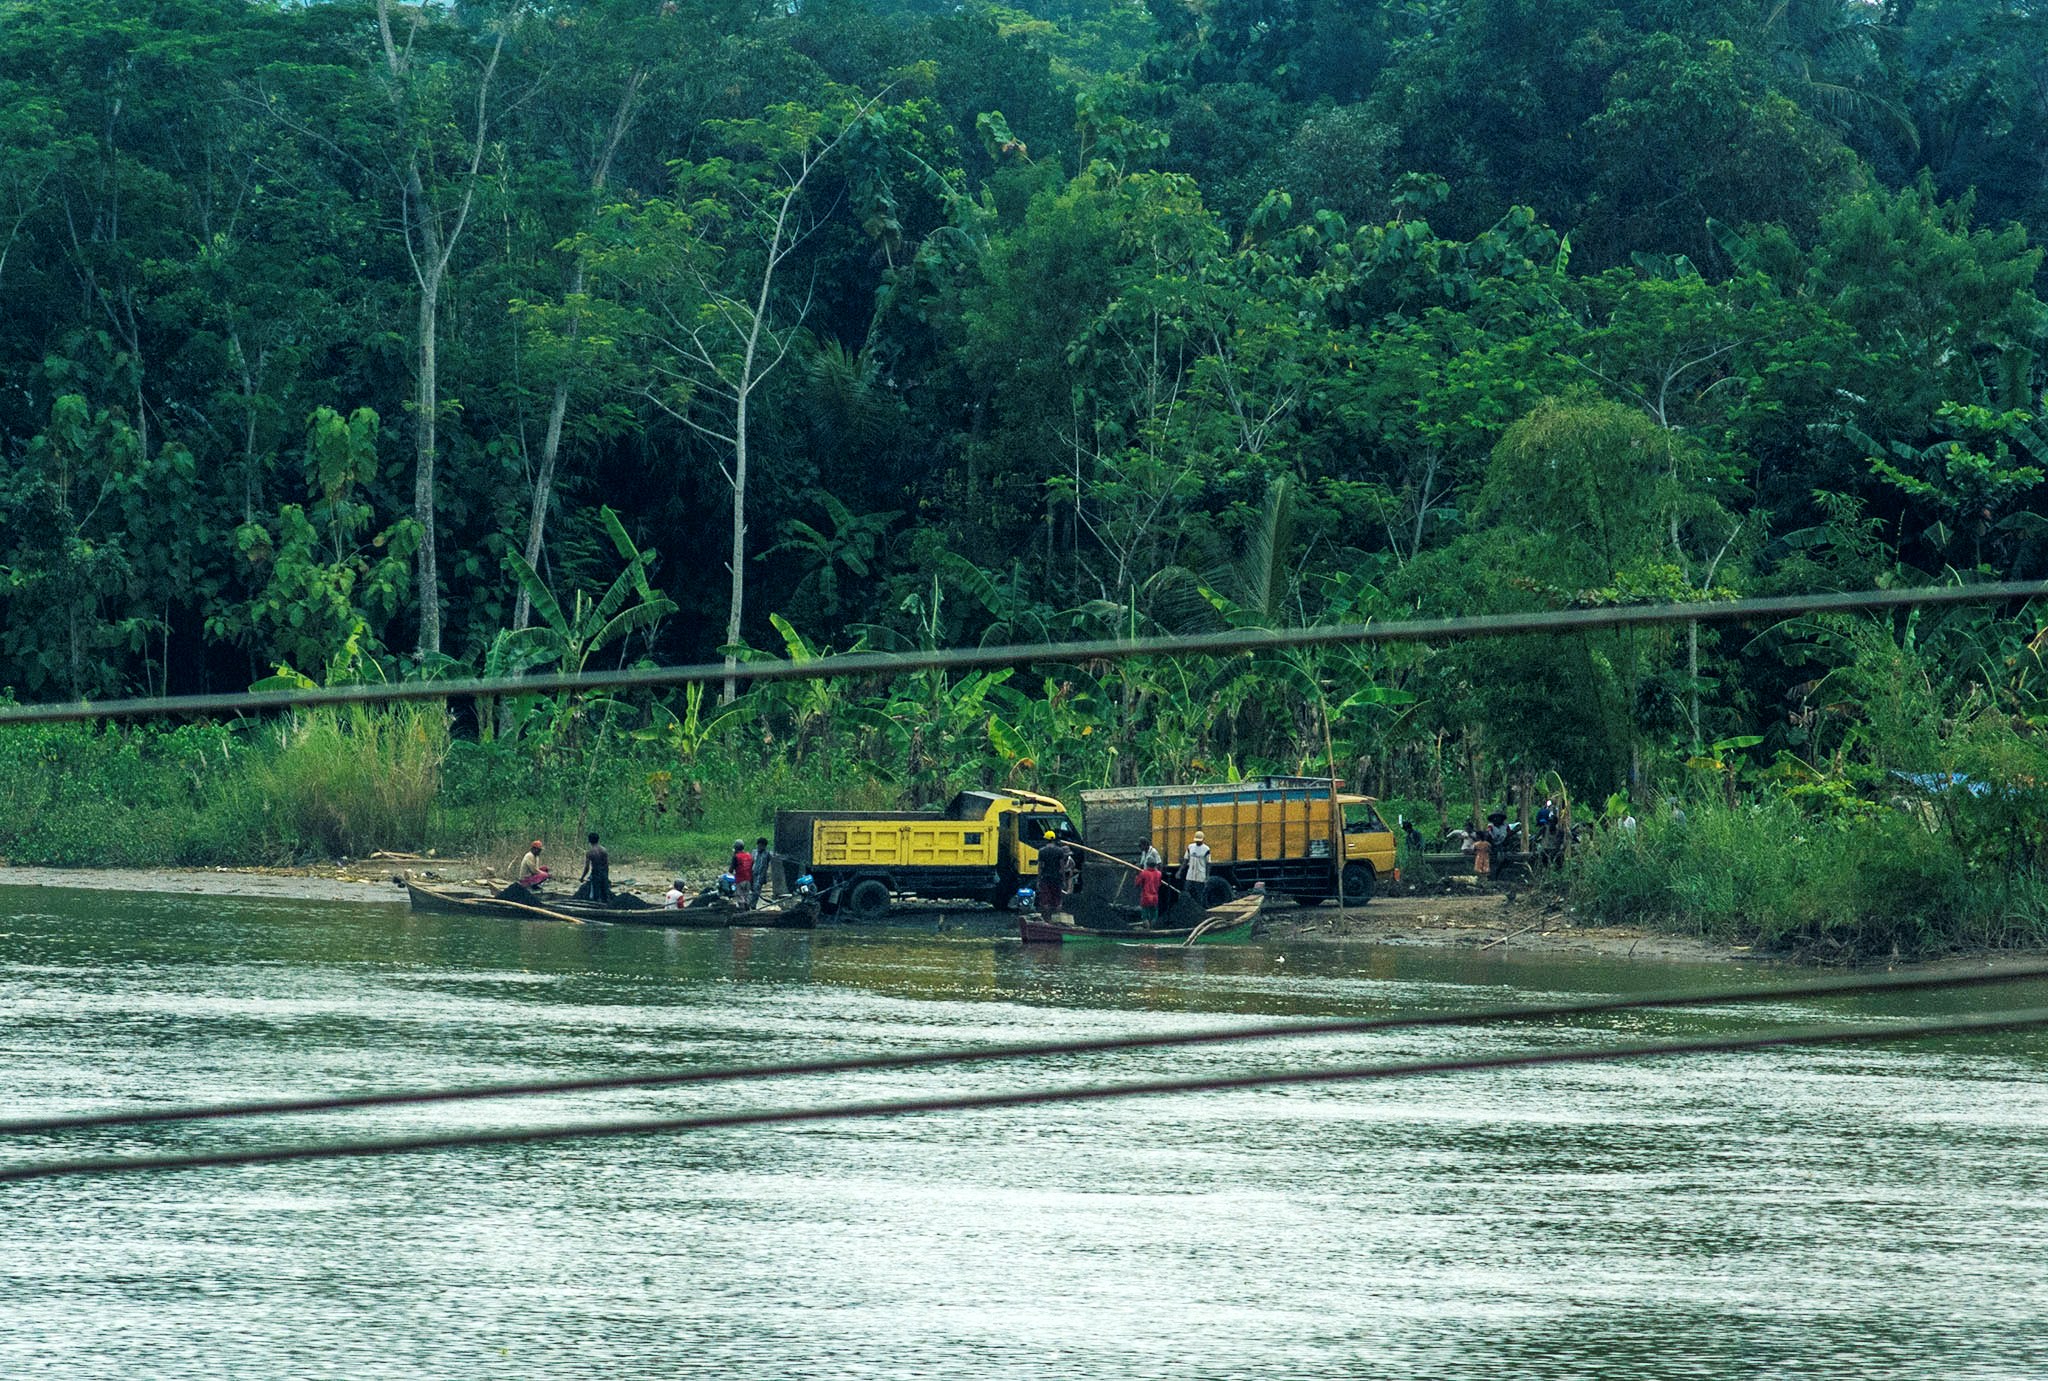 Truk-truk yang mengangkut pasir hasil penambangan di Sungai Serayu, Banyumas, Jawa Tengah. Aktivitas penambangan pasir ini merugikan lingkungan karena meningkatkan abrasi di sepanjang DAS Serayu. Foto : L Darmawan